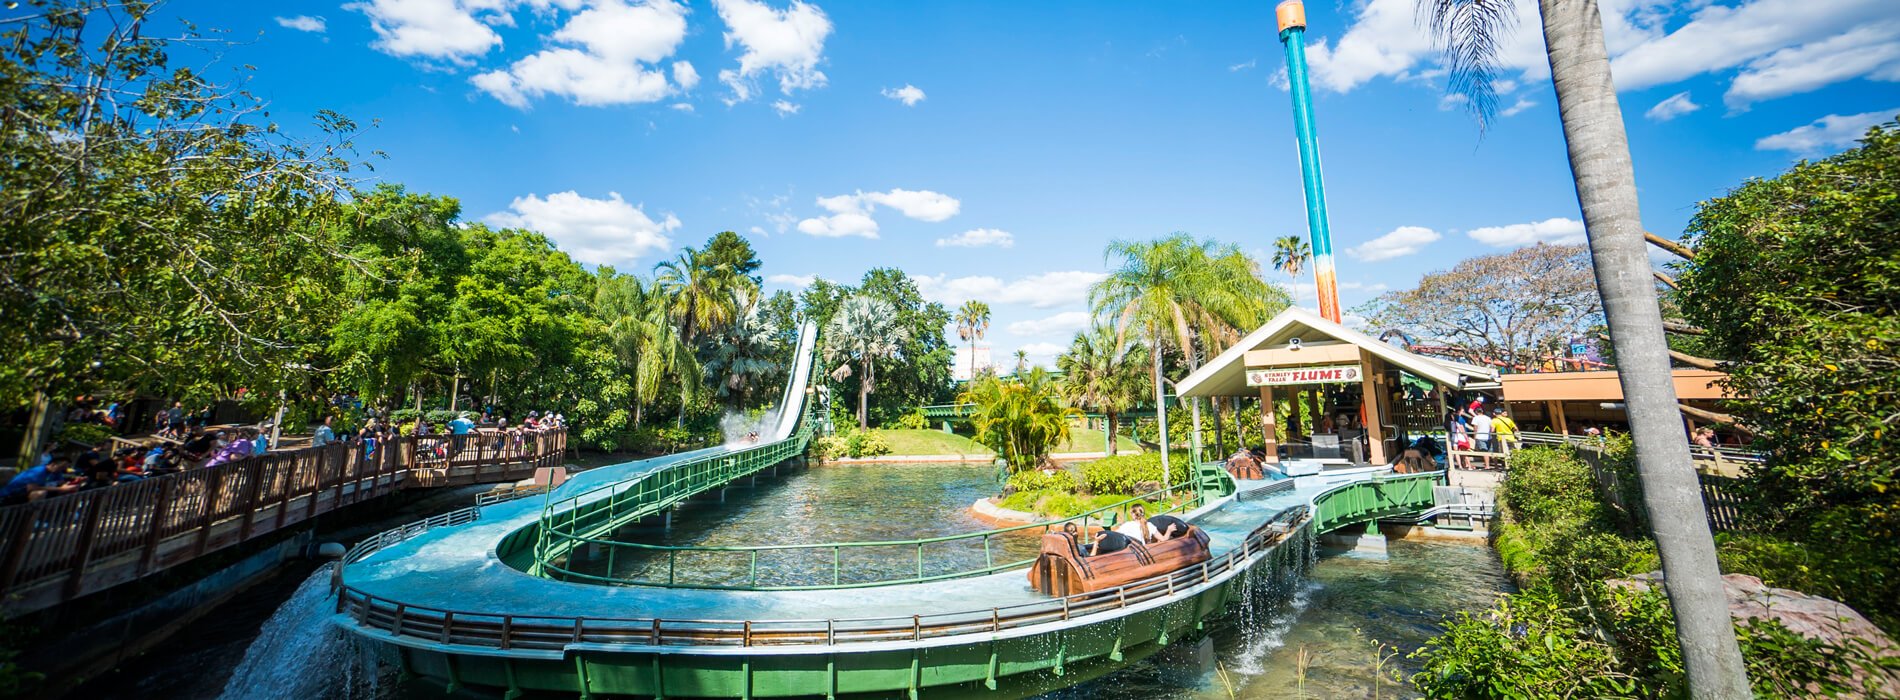 Ride Stanley Falls at Busch Gardens Tampa Bay